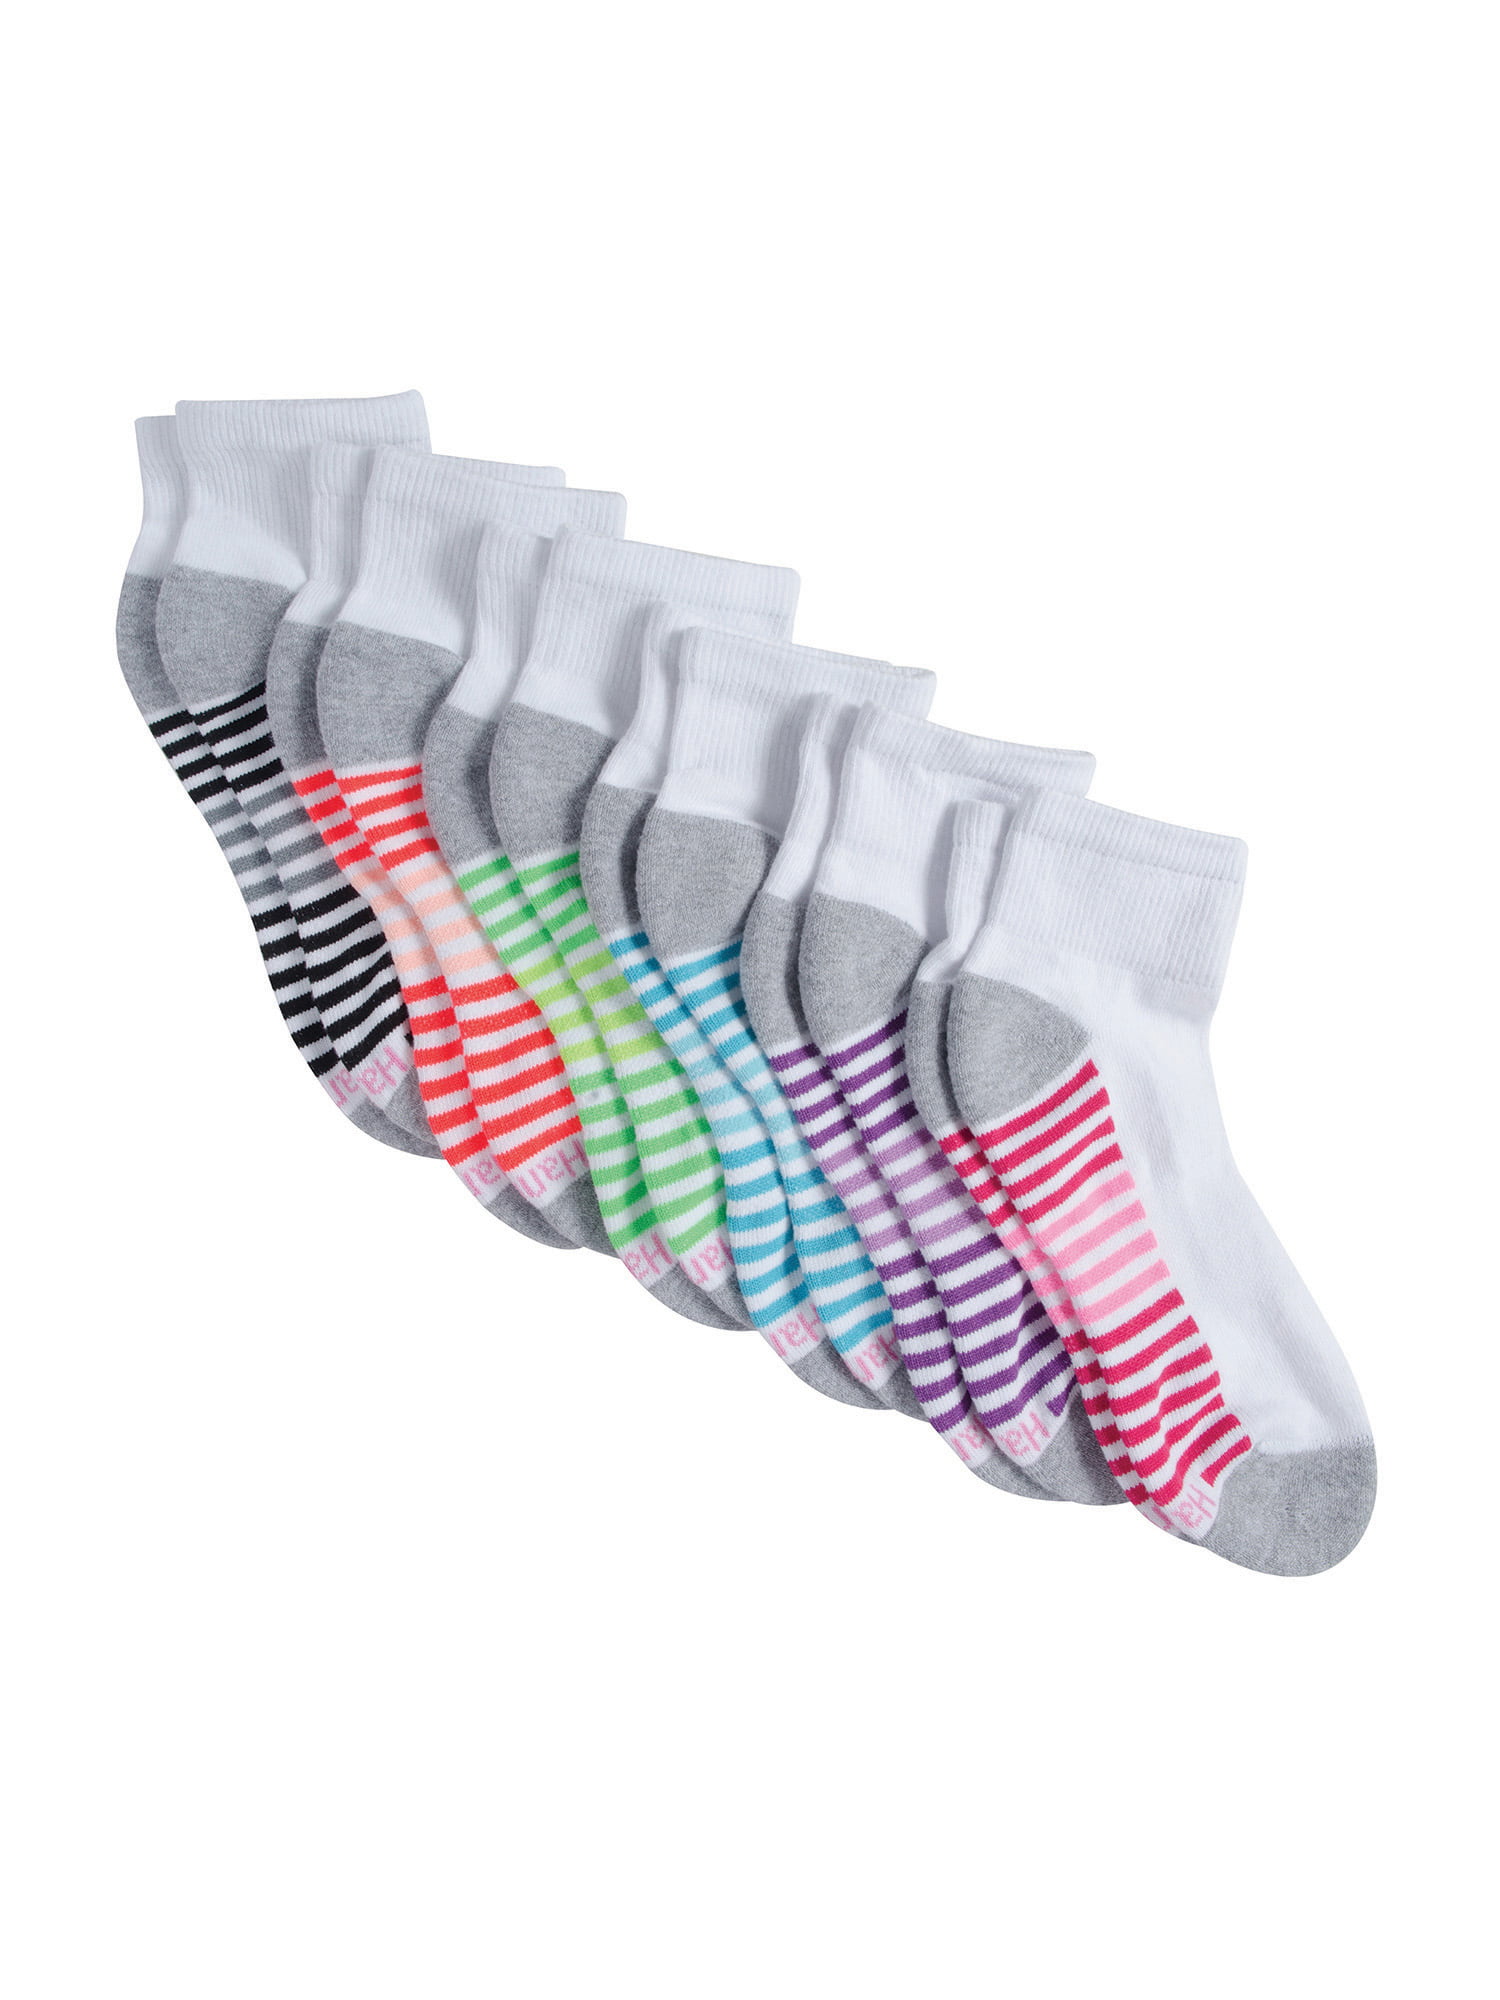 Hanes Women's Cool Comfort Sport Ankle Socks, 6 Pack - Walmart.com